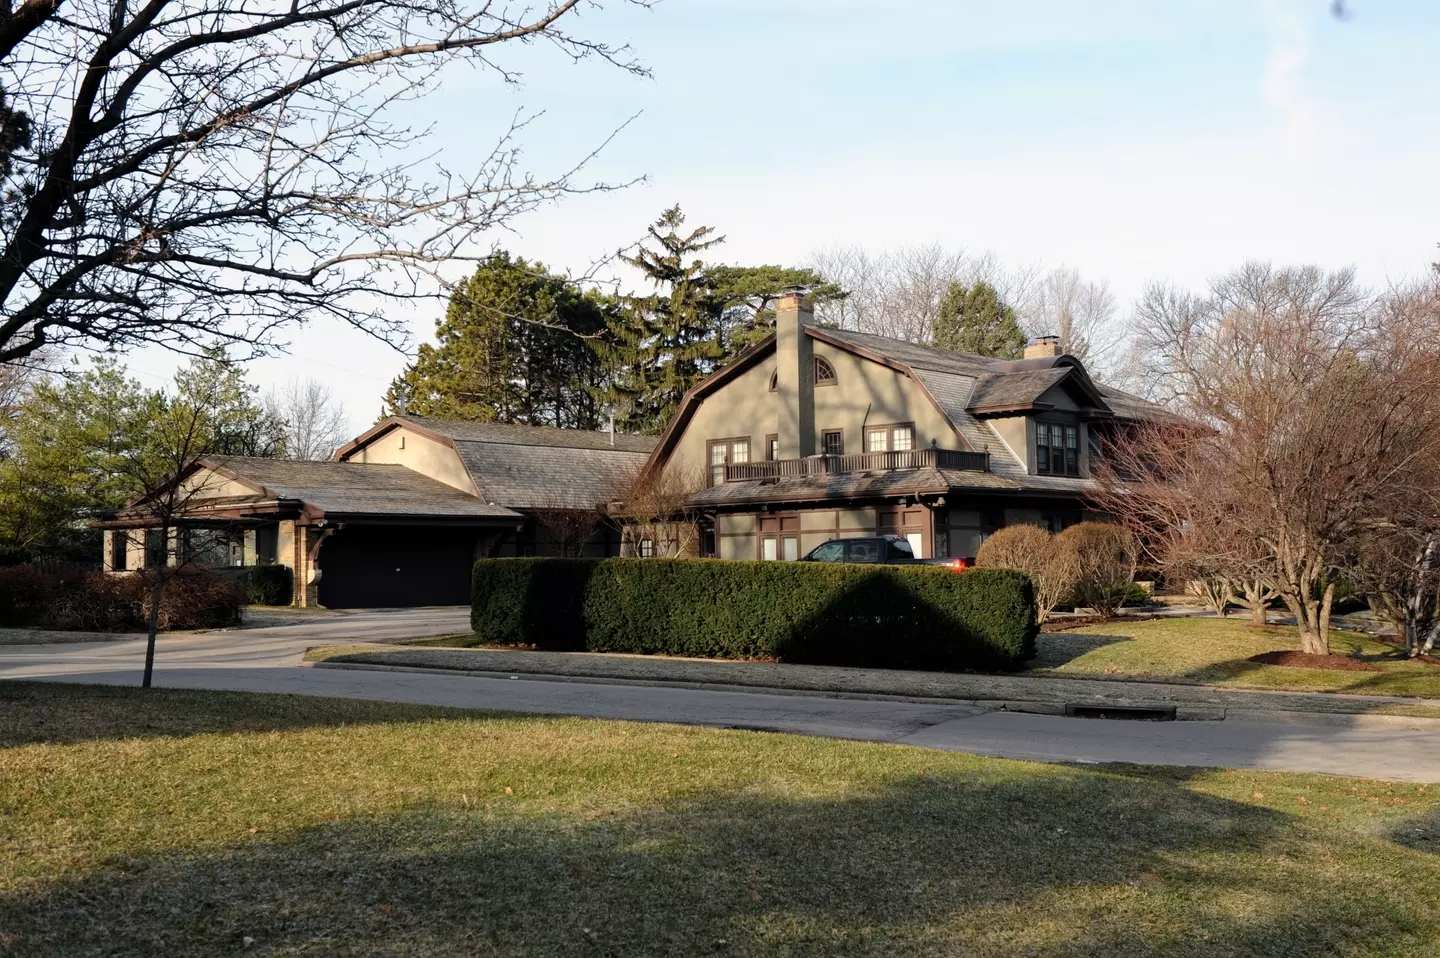 Warren Buffett bought his home for $31,500 in 1958.